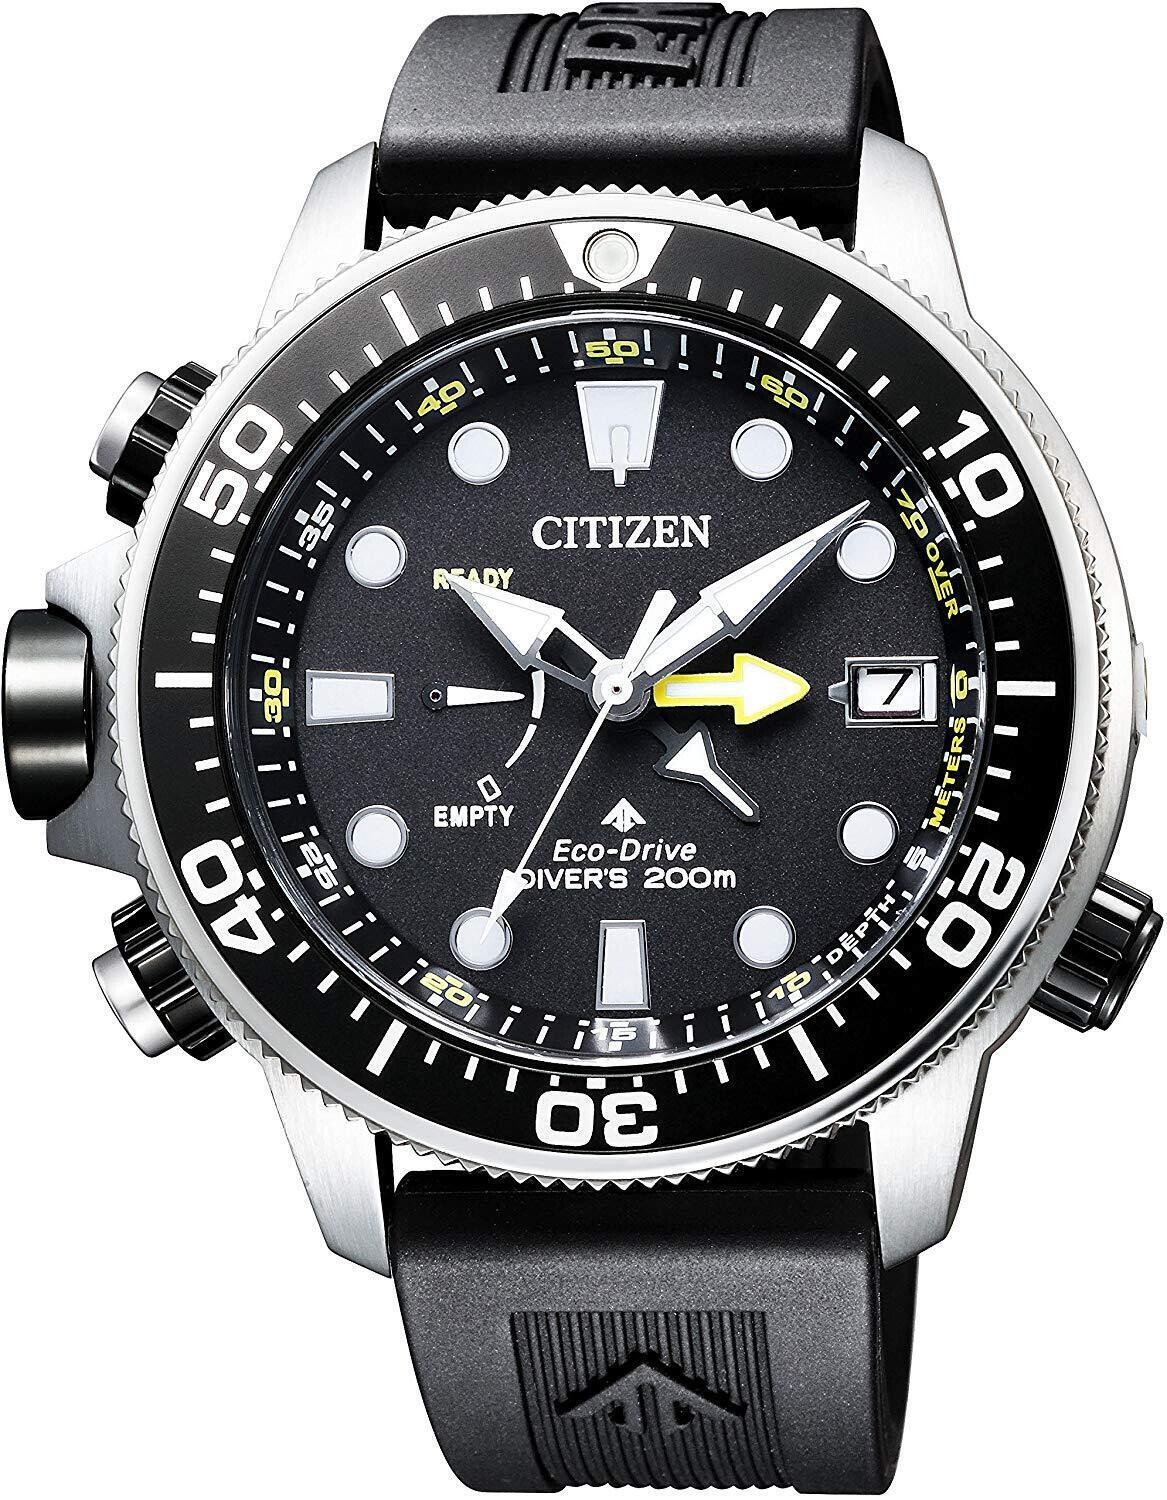 Citizen ProMaster Marine Aqualand bn2036-14e Professional Men's Dive Watch 46mm
Depth Gauge 200m WR Power Reserve Indicator Rubber Strap Humidity
Sensor